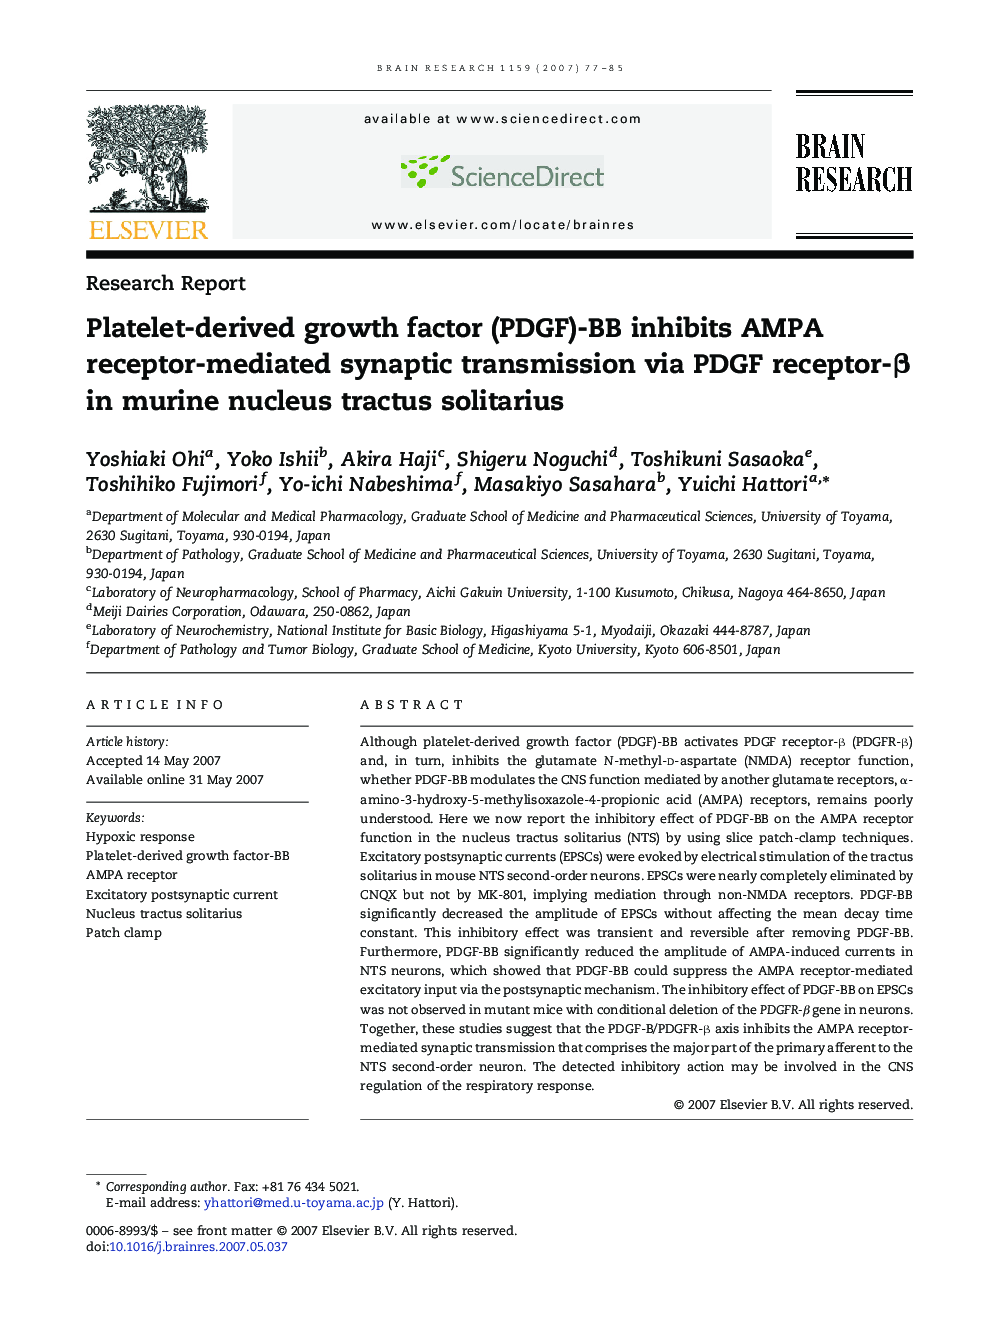 Platelet-derived growth factor (PDGF)-BB inhibits AMPA receptor-mediated synaptic transmission via PDGF receptor-β in murine nucleus tractus solitarius